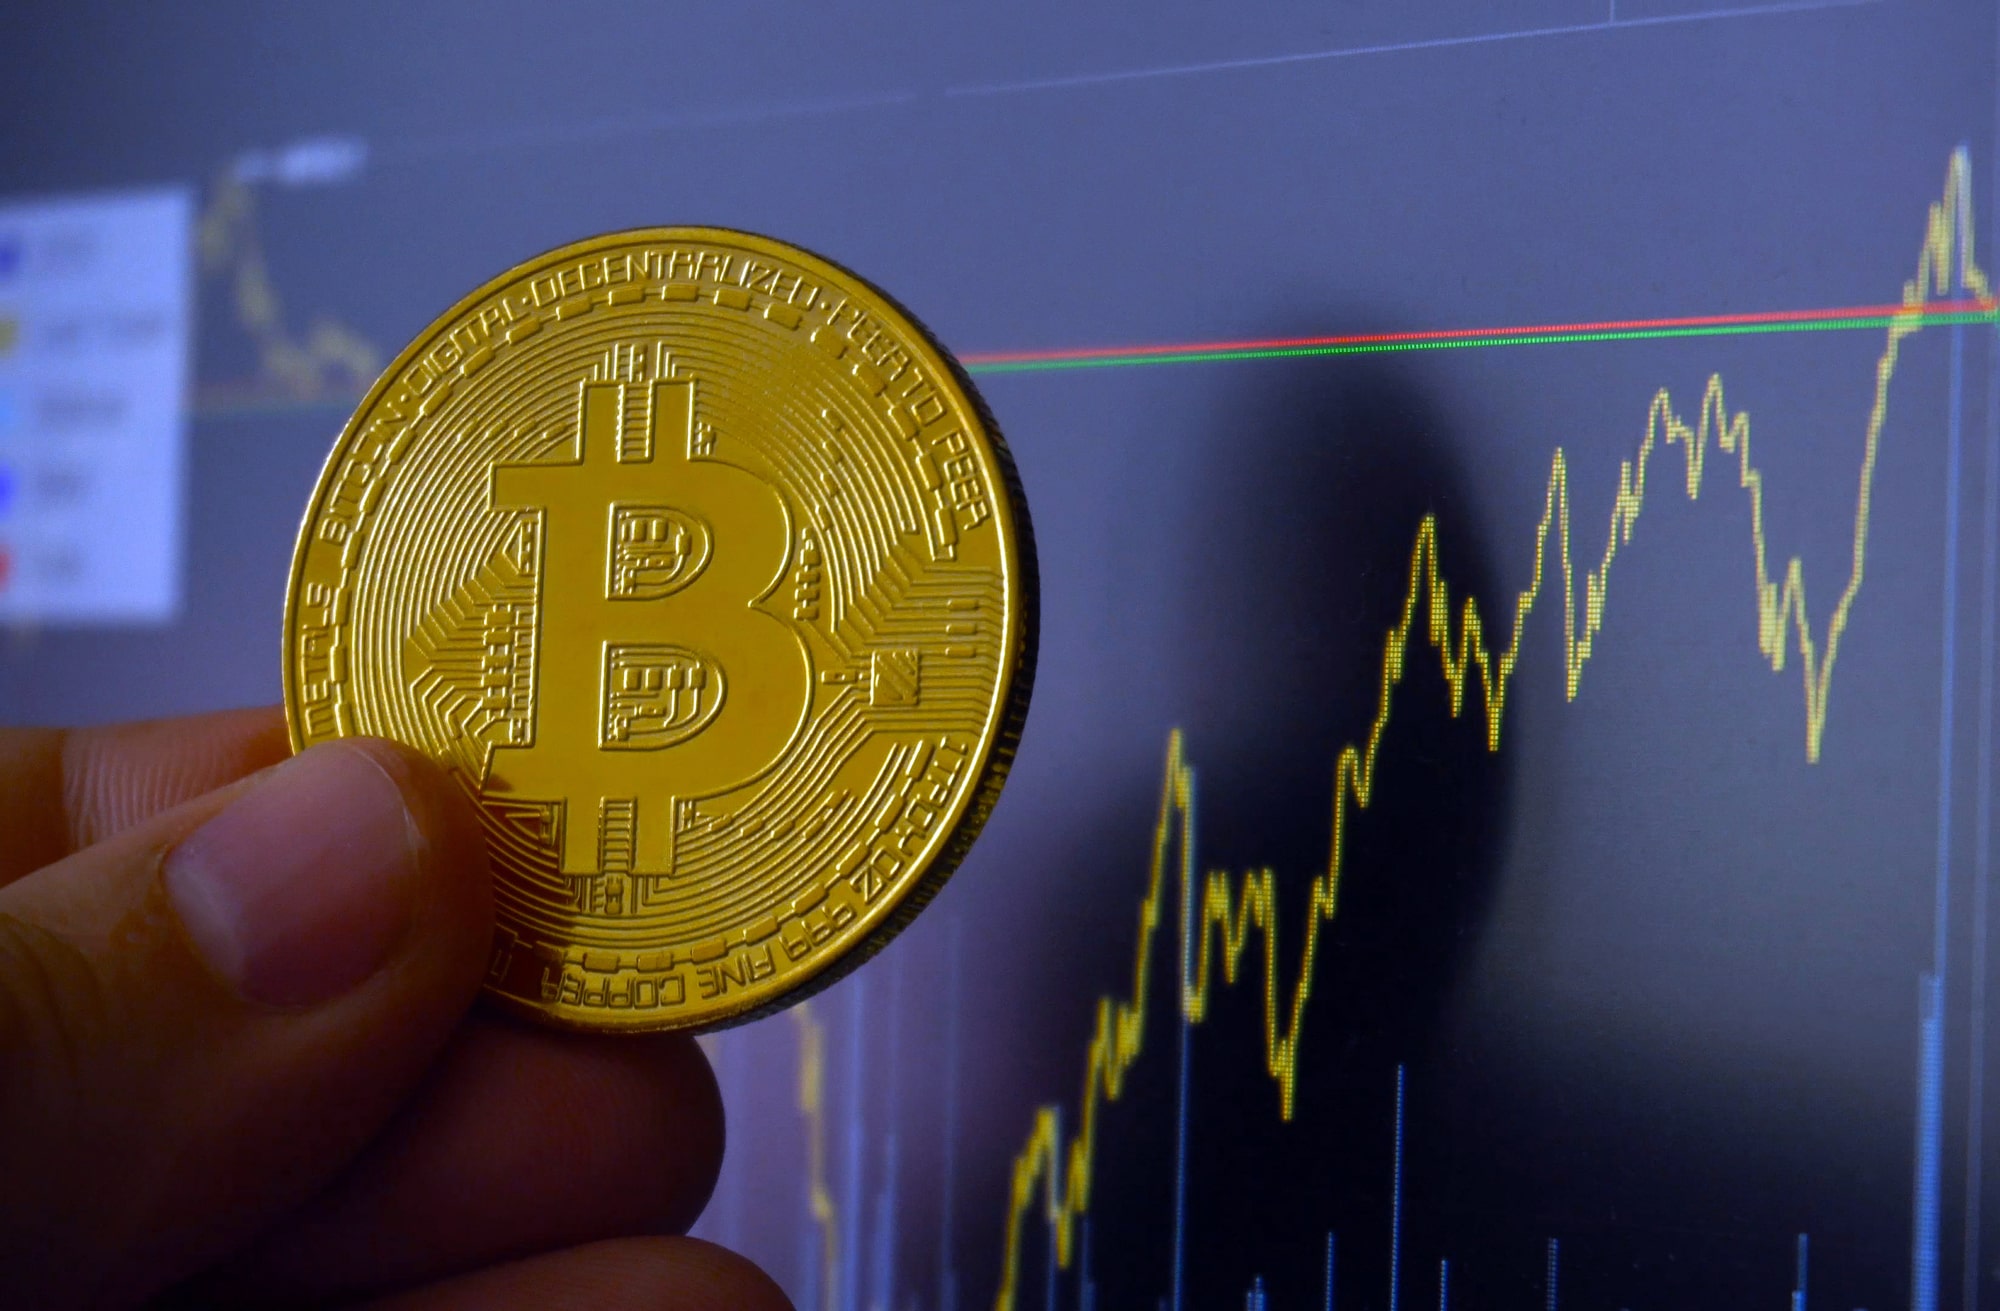 Bitcoin and major cryptocurrencies upturn on good news, adding $114B to the crypto market